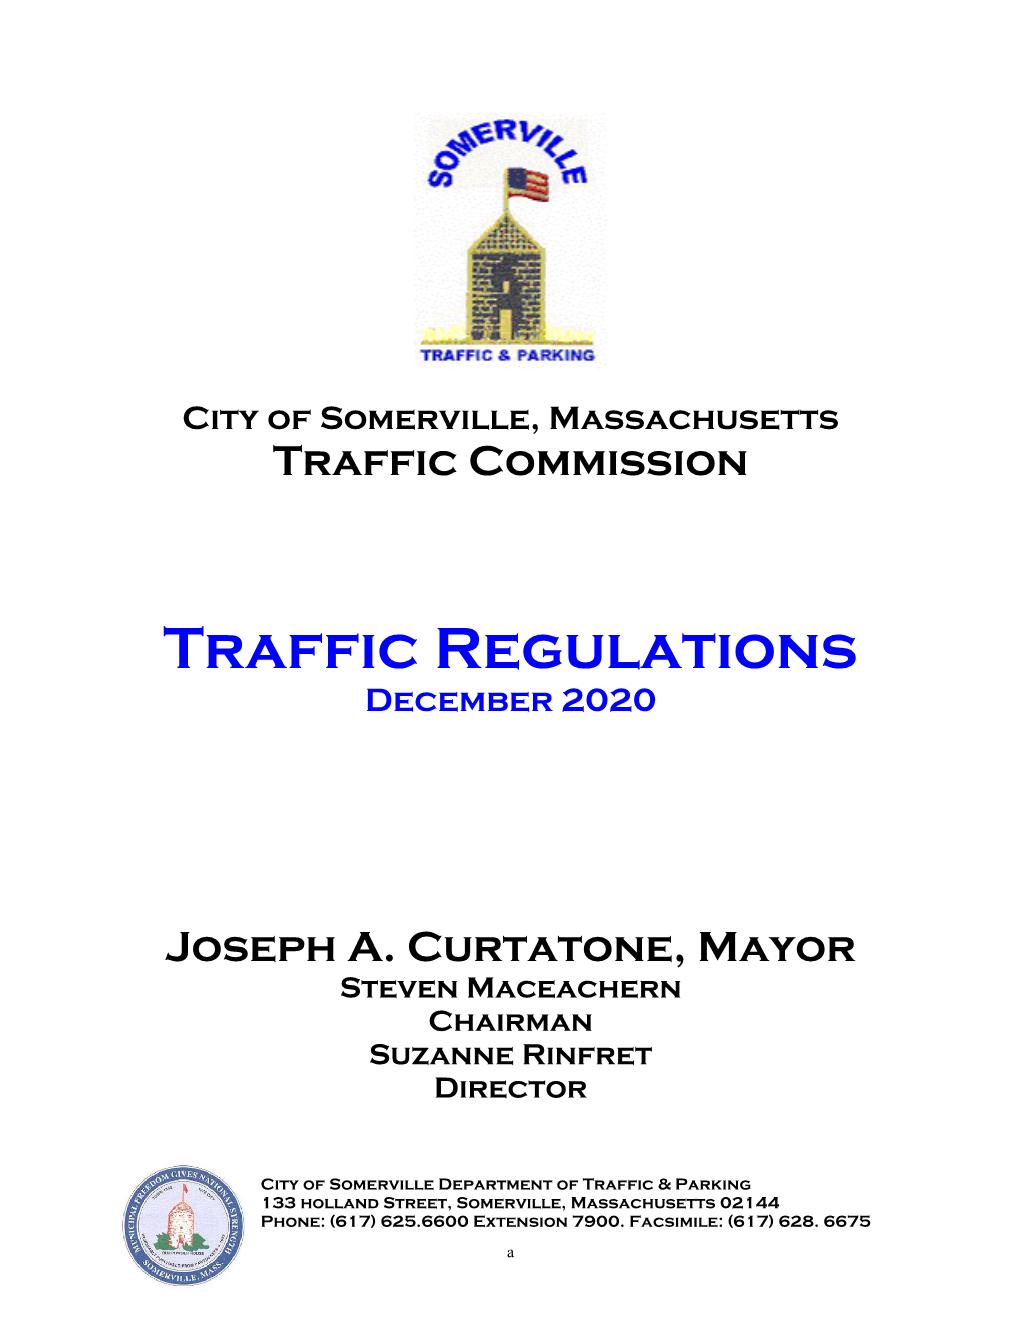 Traffic Regulations